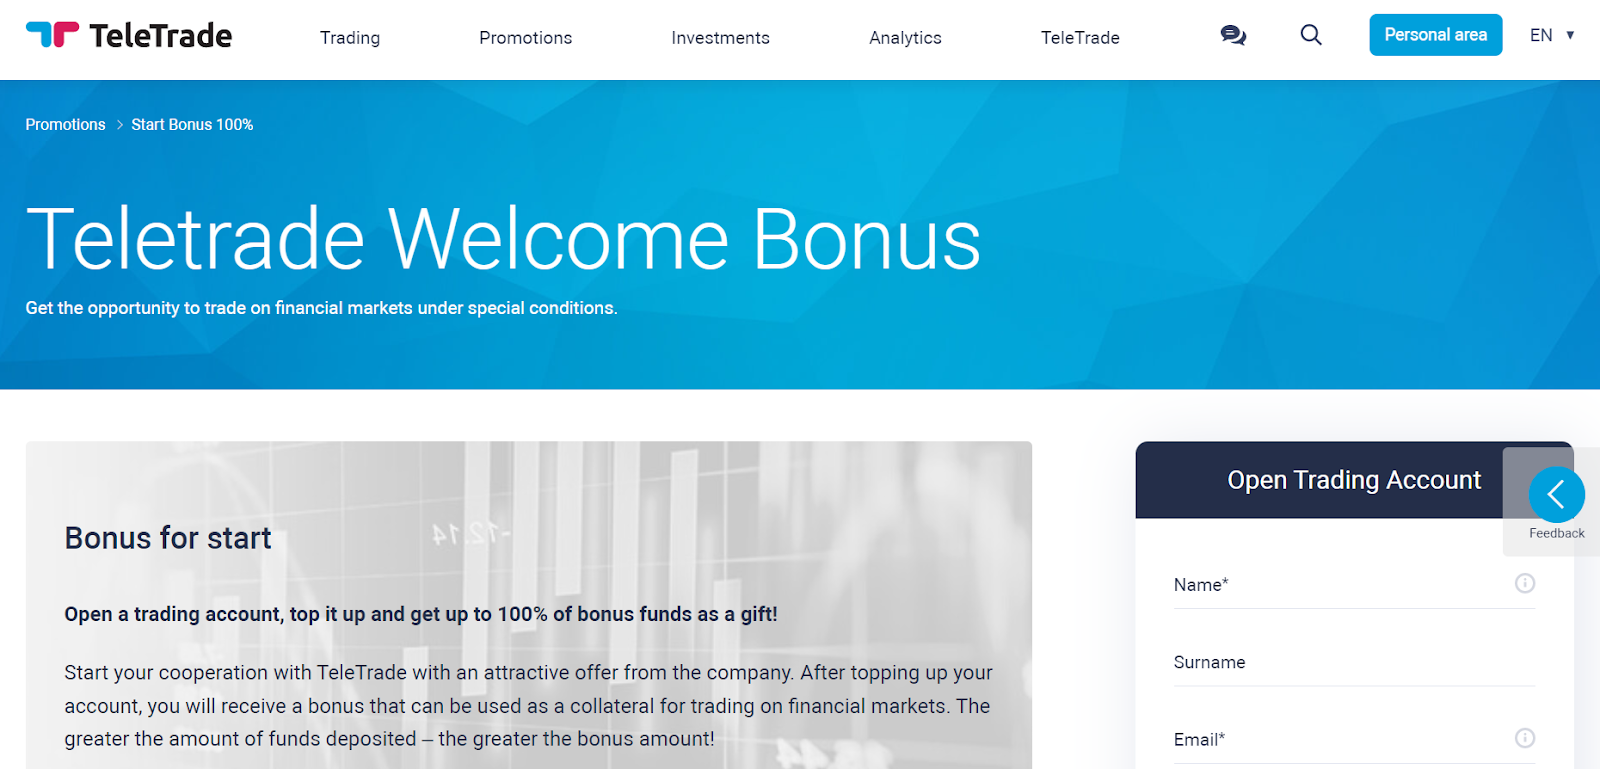 Teletrade bonuses - Welcome bonus